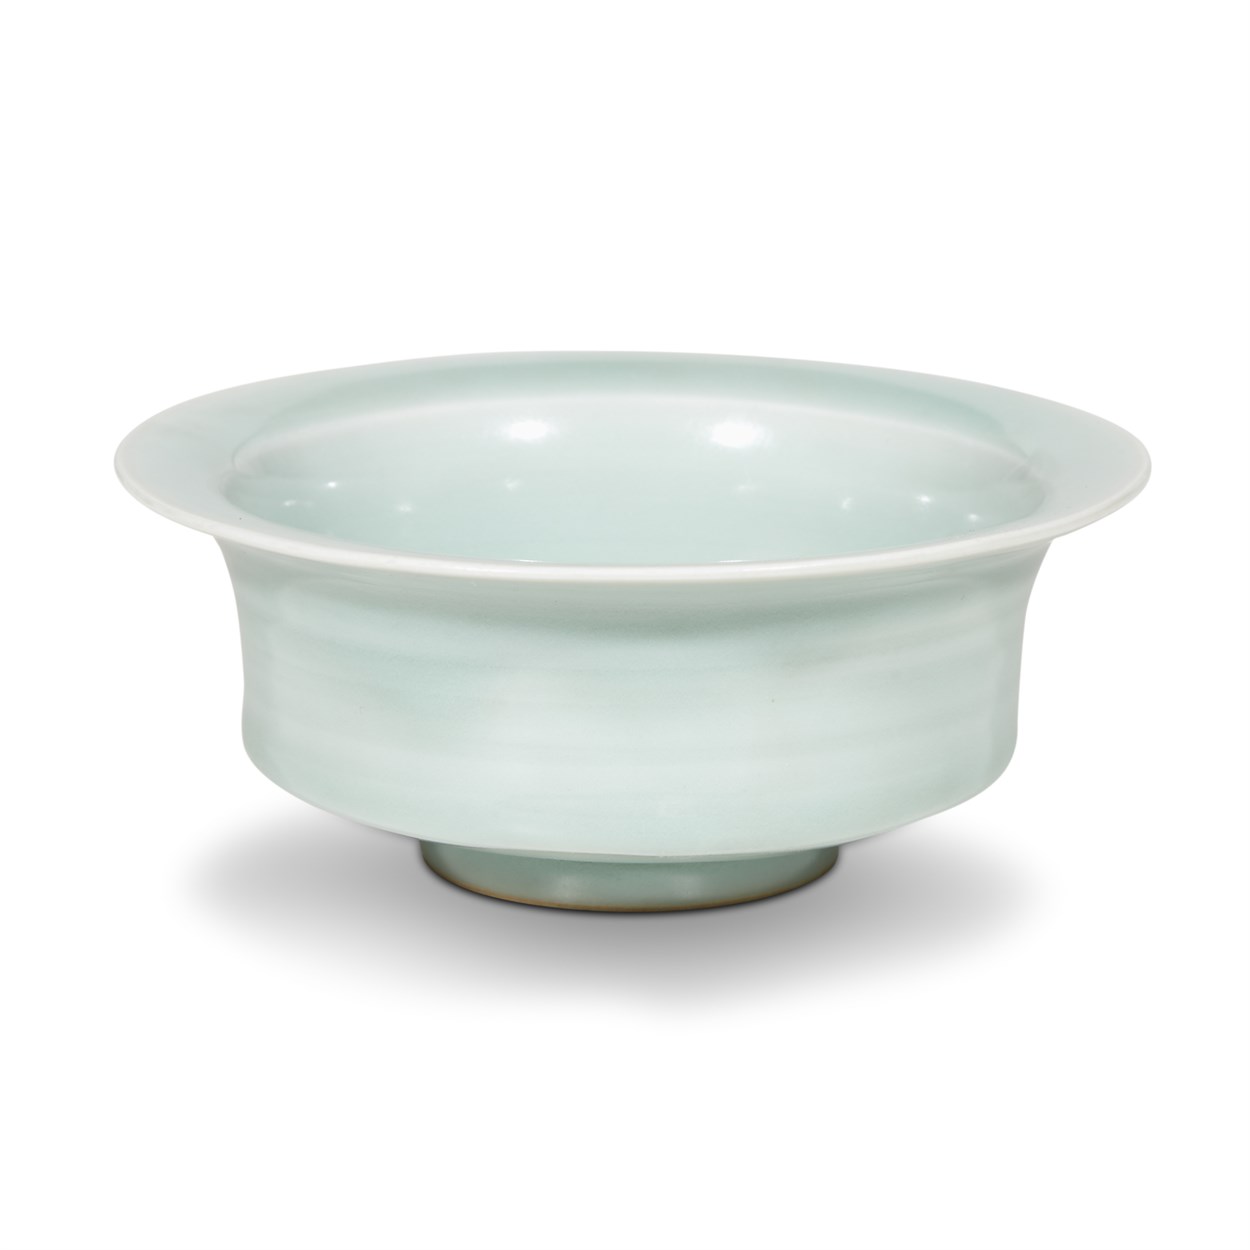 Lot 160 - A Chinese celadon glazed bowl